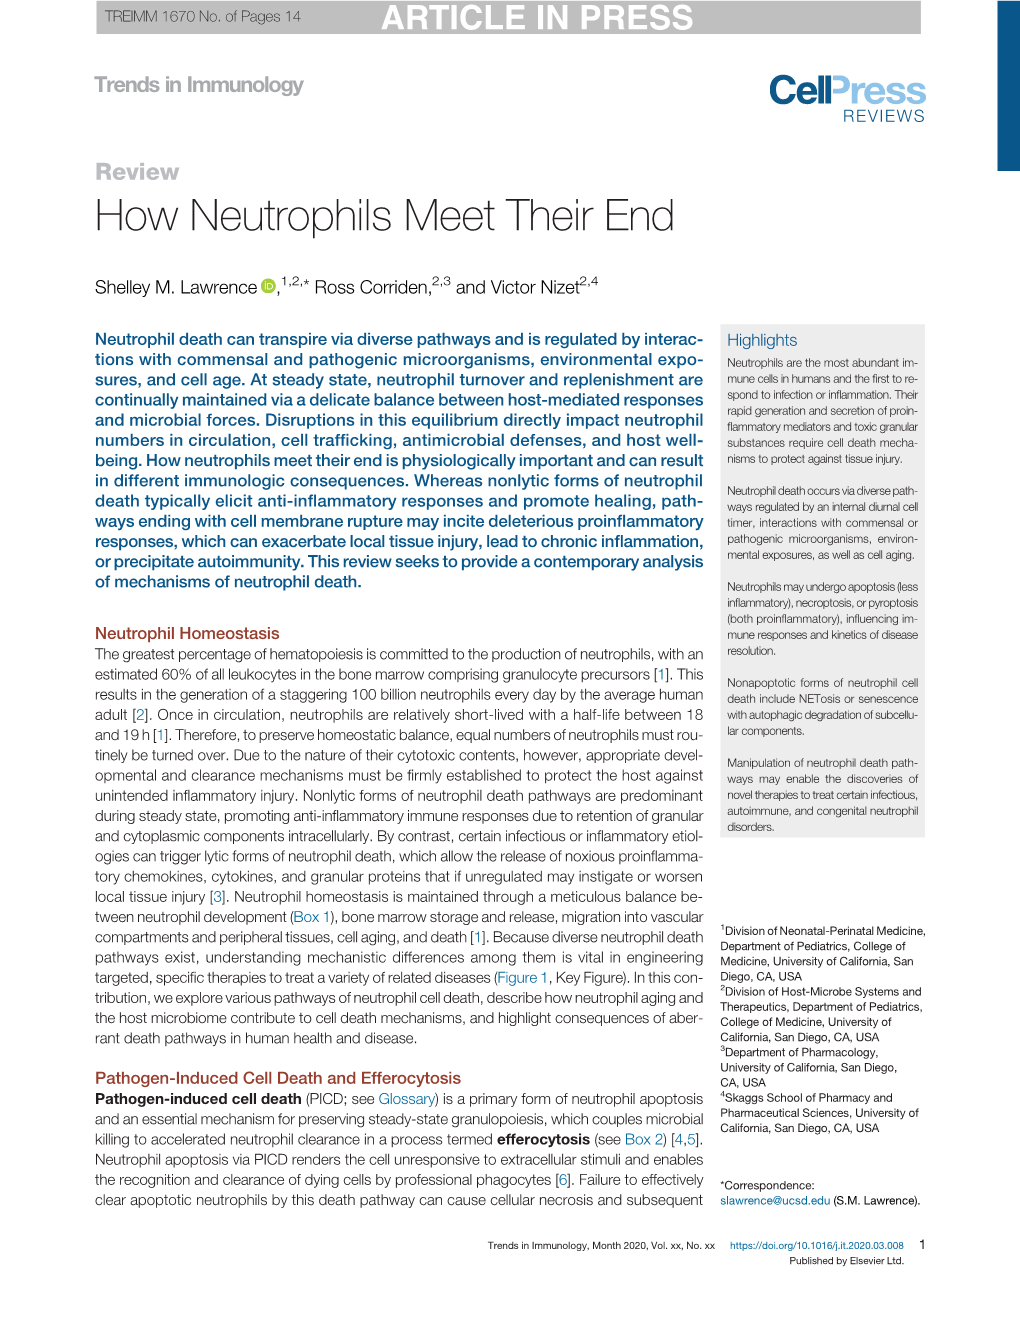 How Neutrophils Meet Their End